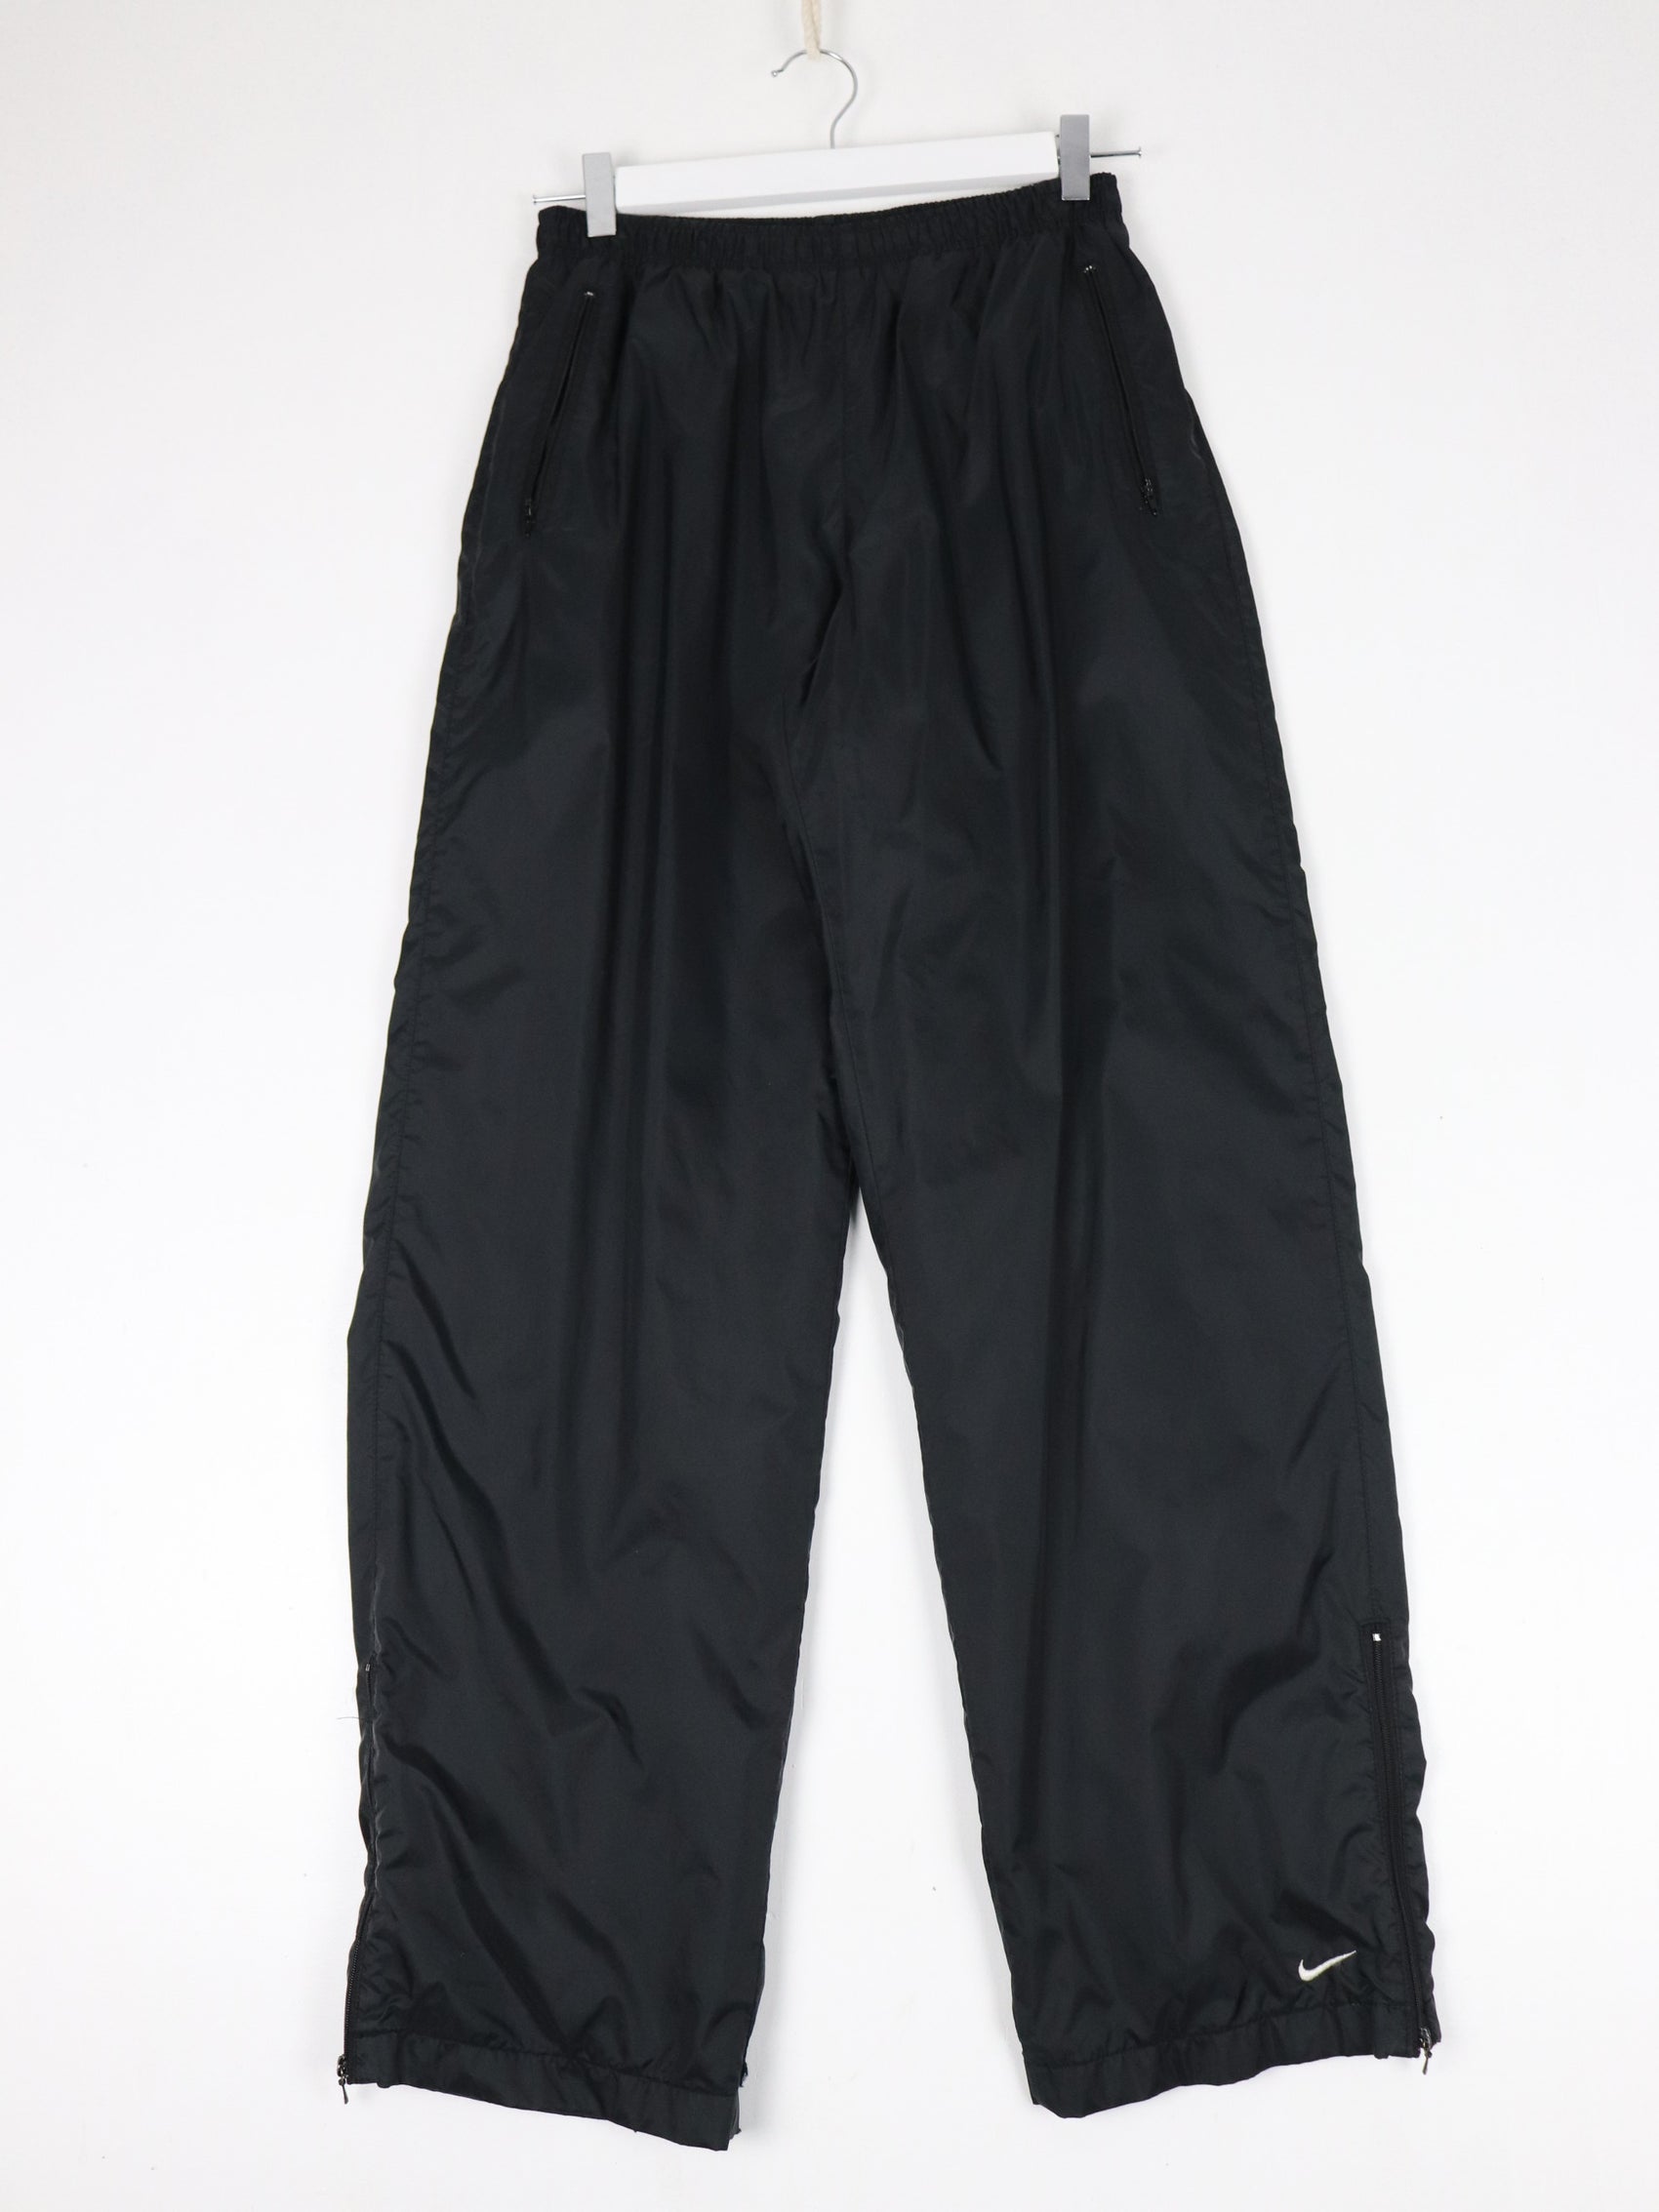 Vintage Nike Pants Womens Small Black Track Swoosh 24 x 30